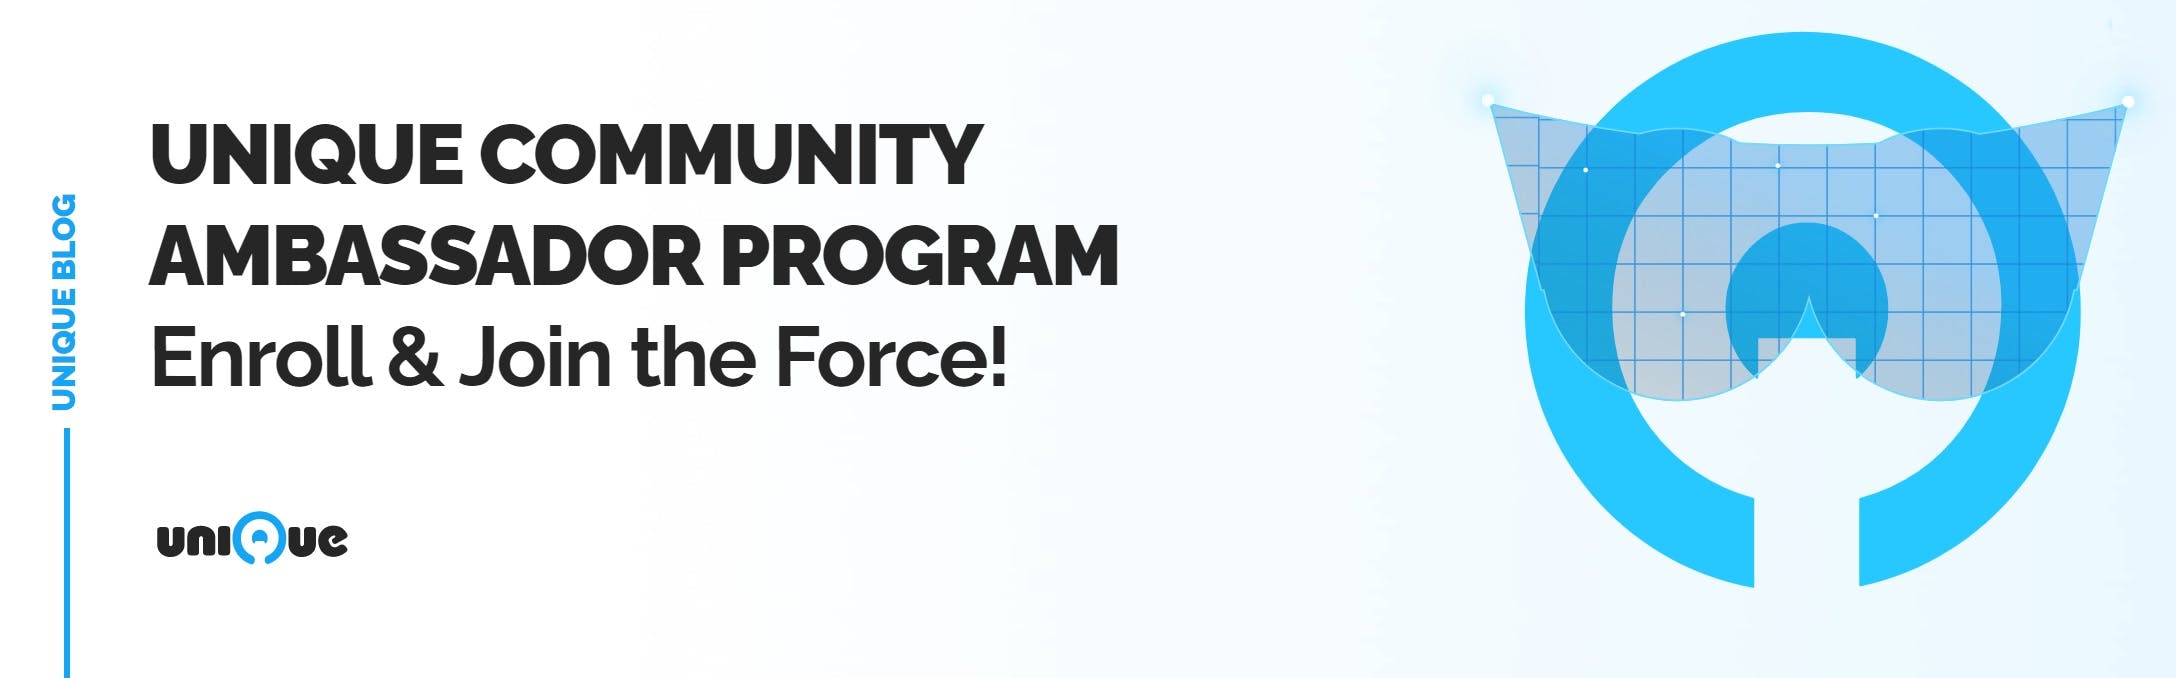 Unique Community Ambassador Program Enroll & Join the Force!